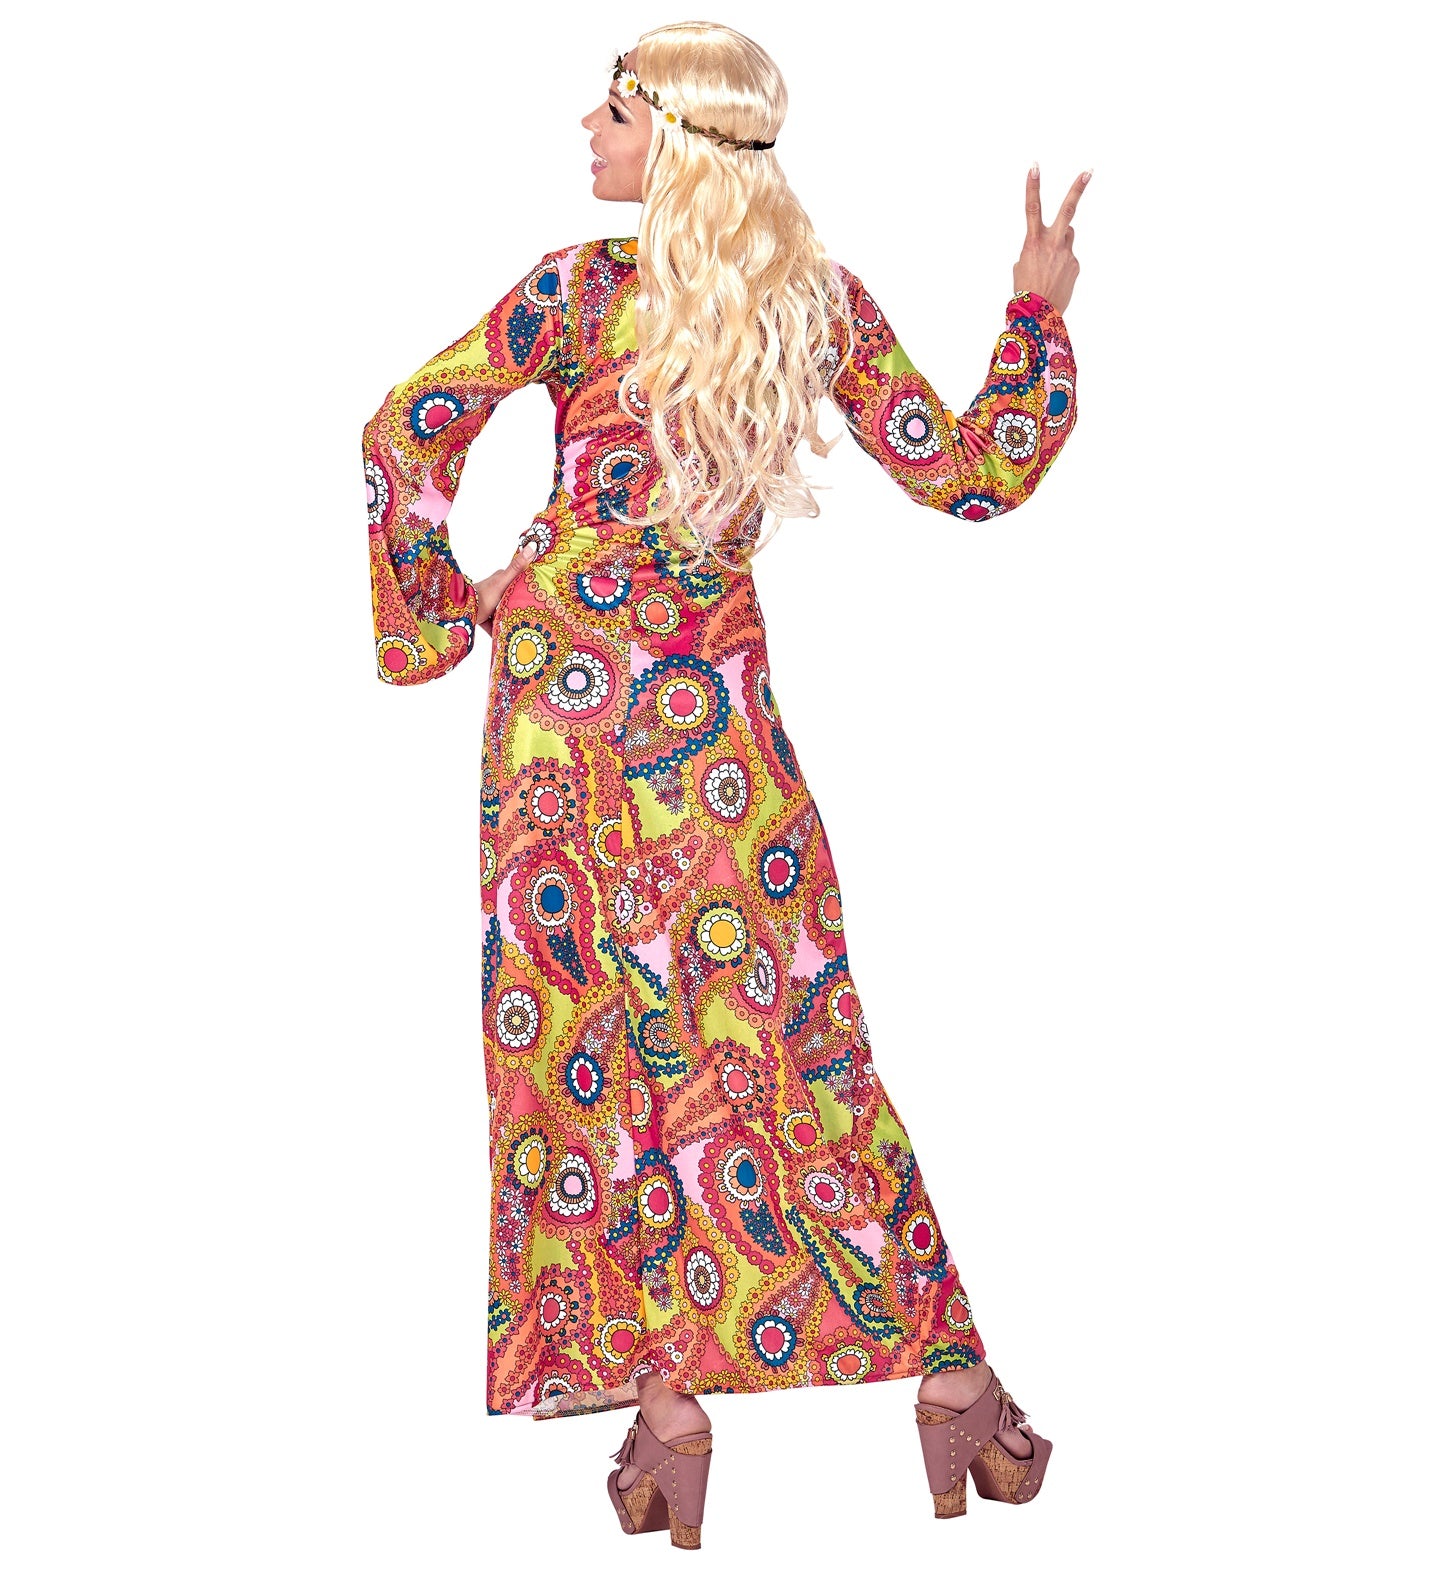 Moon Child Hippie Costume Adult